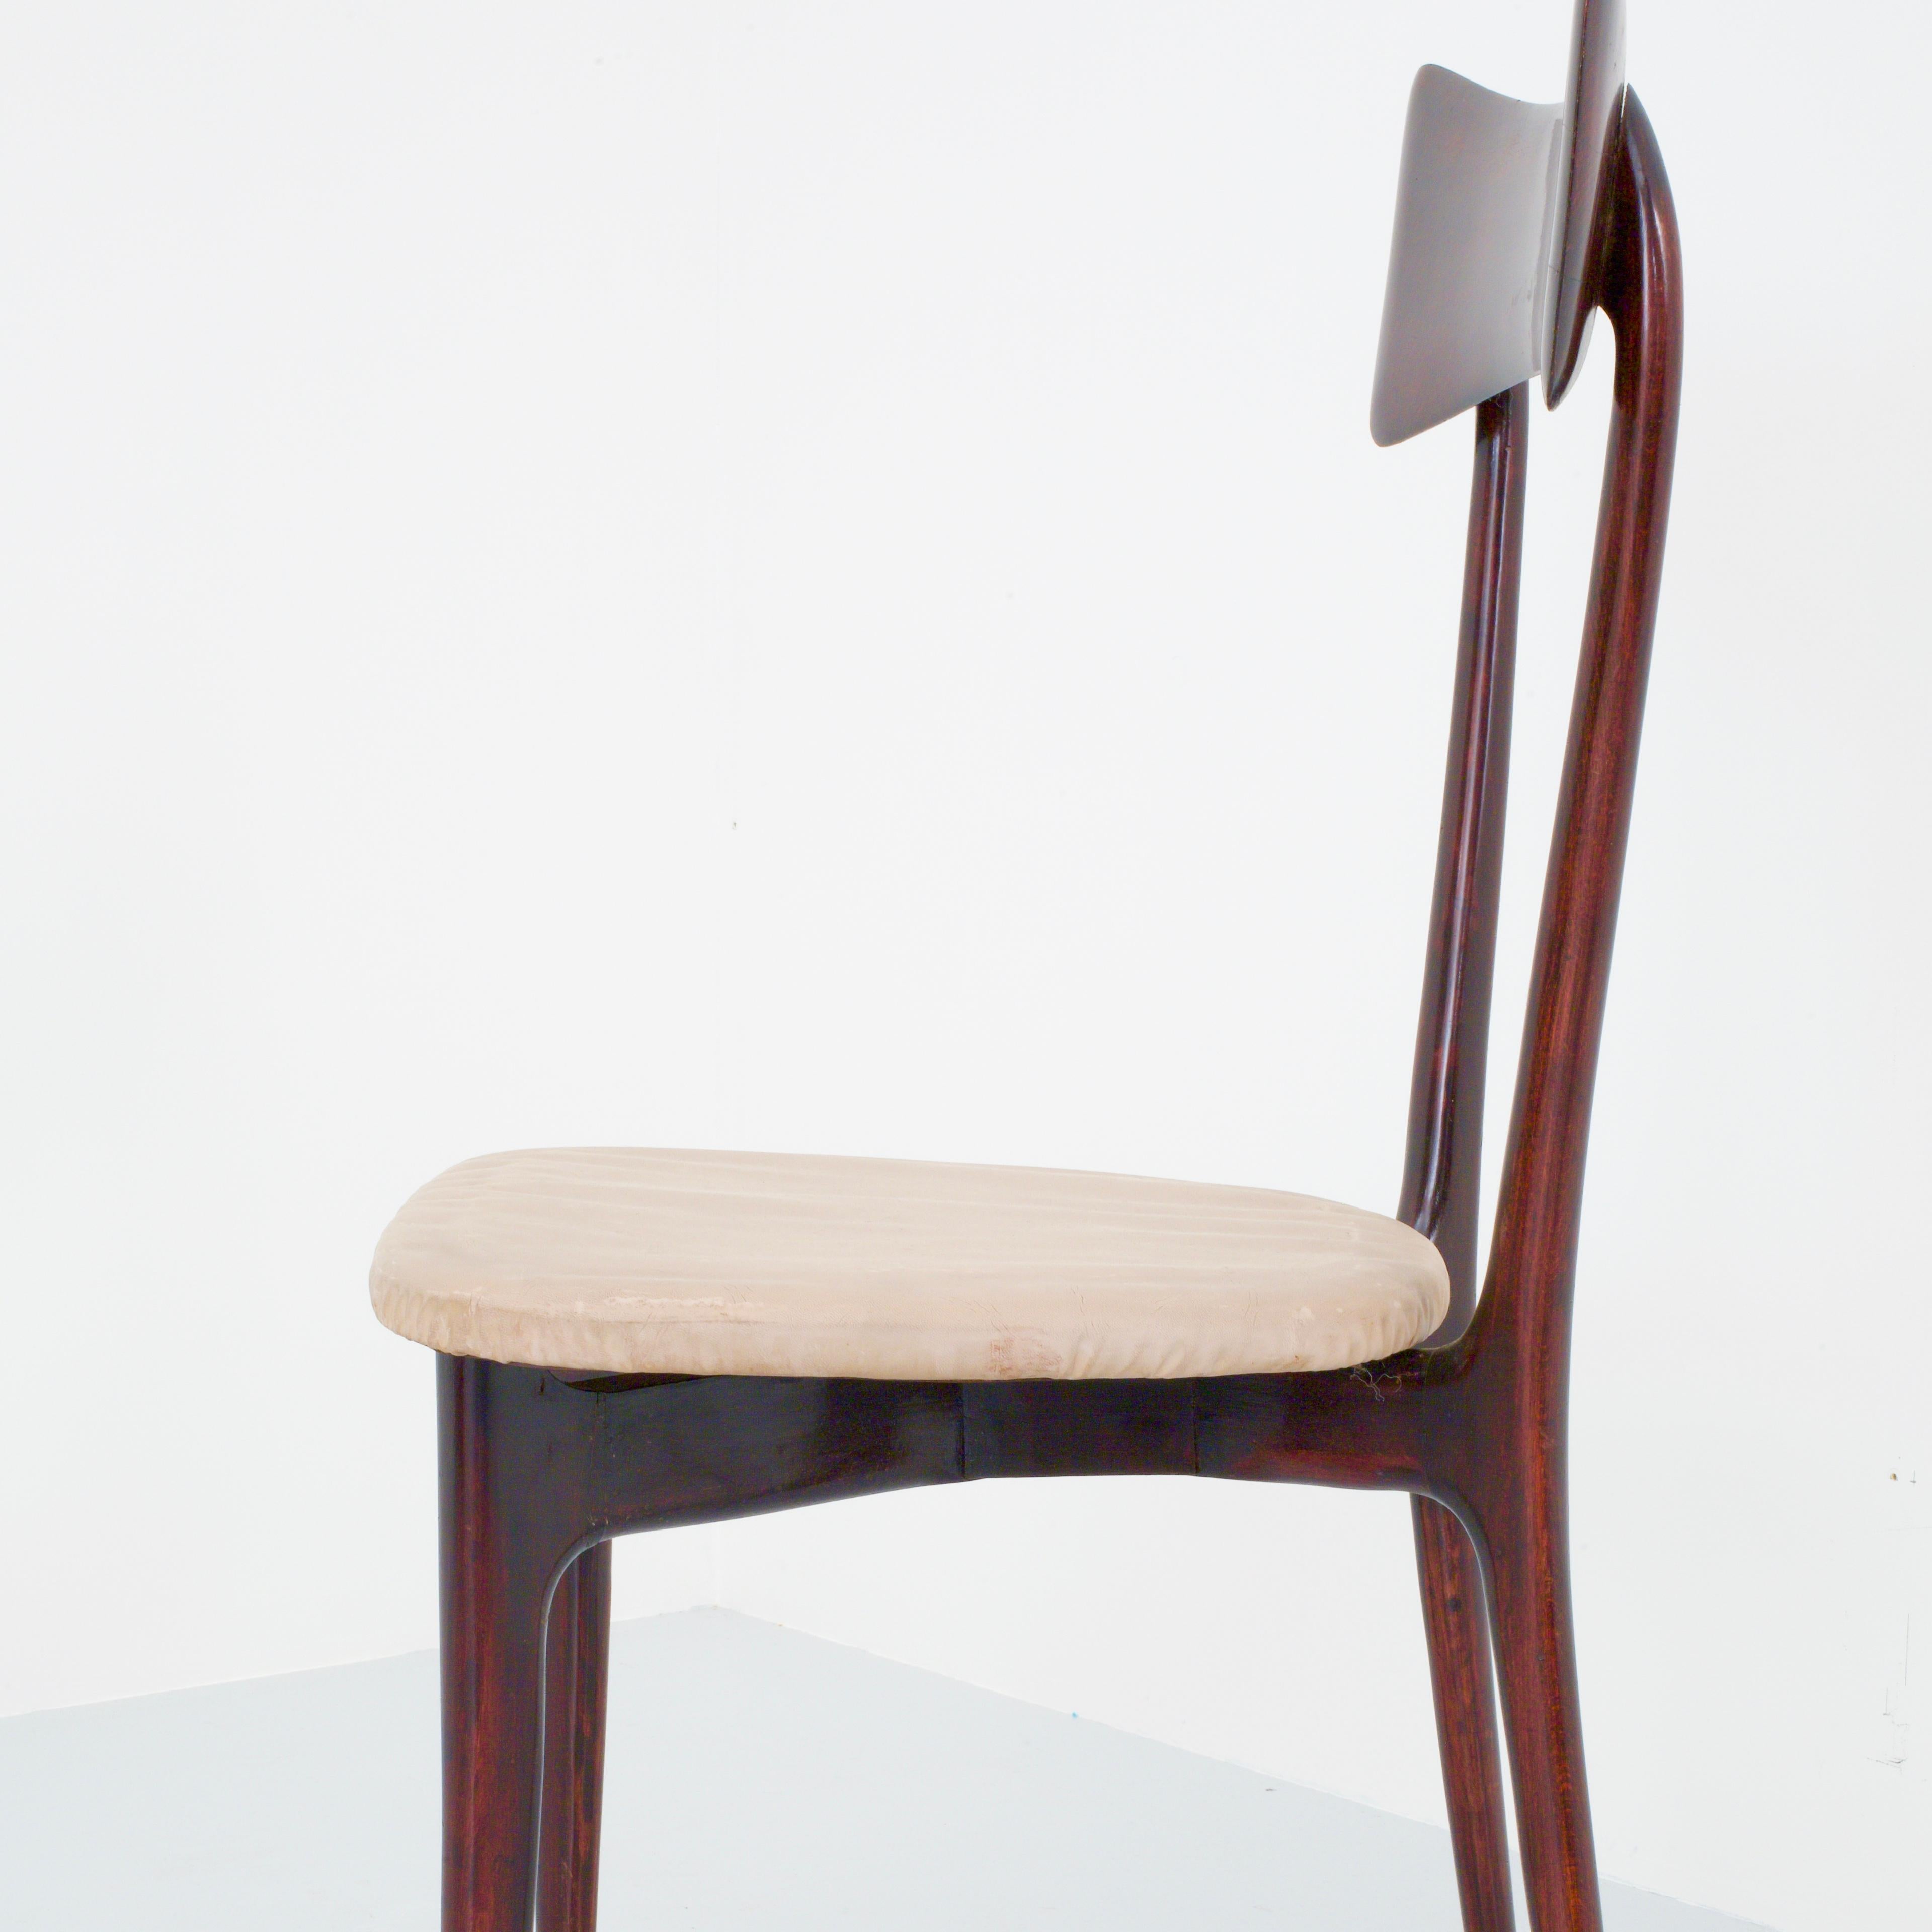 Mahogany Set of 3 Dining Chairs by Ico & Luisa Parisi for Ariberto Colombo, Italy, 1955